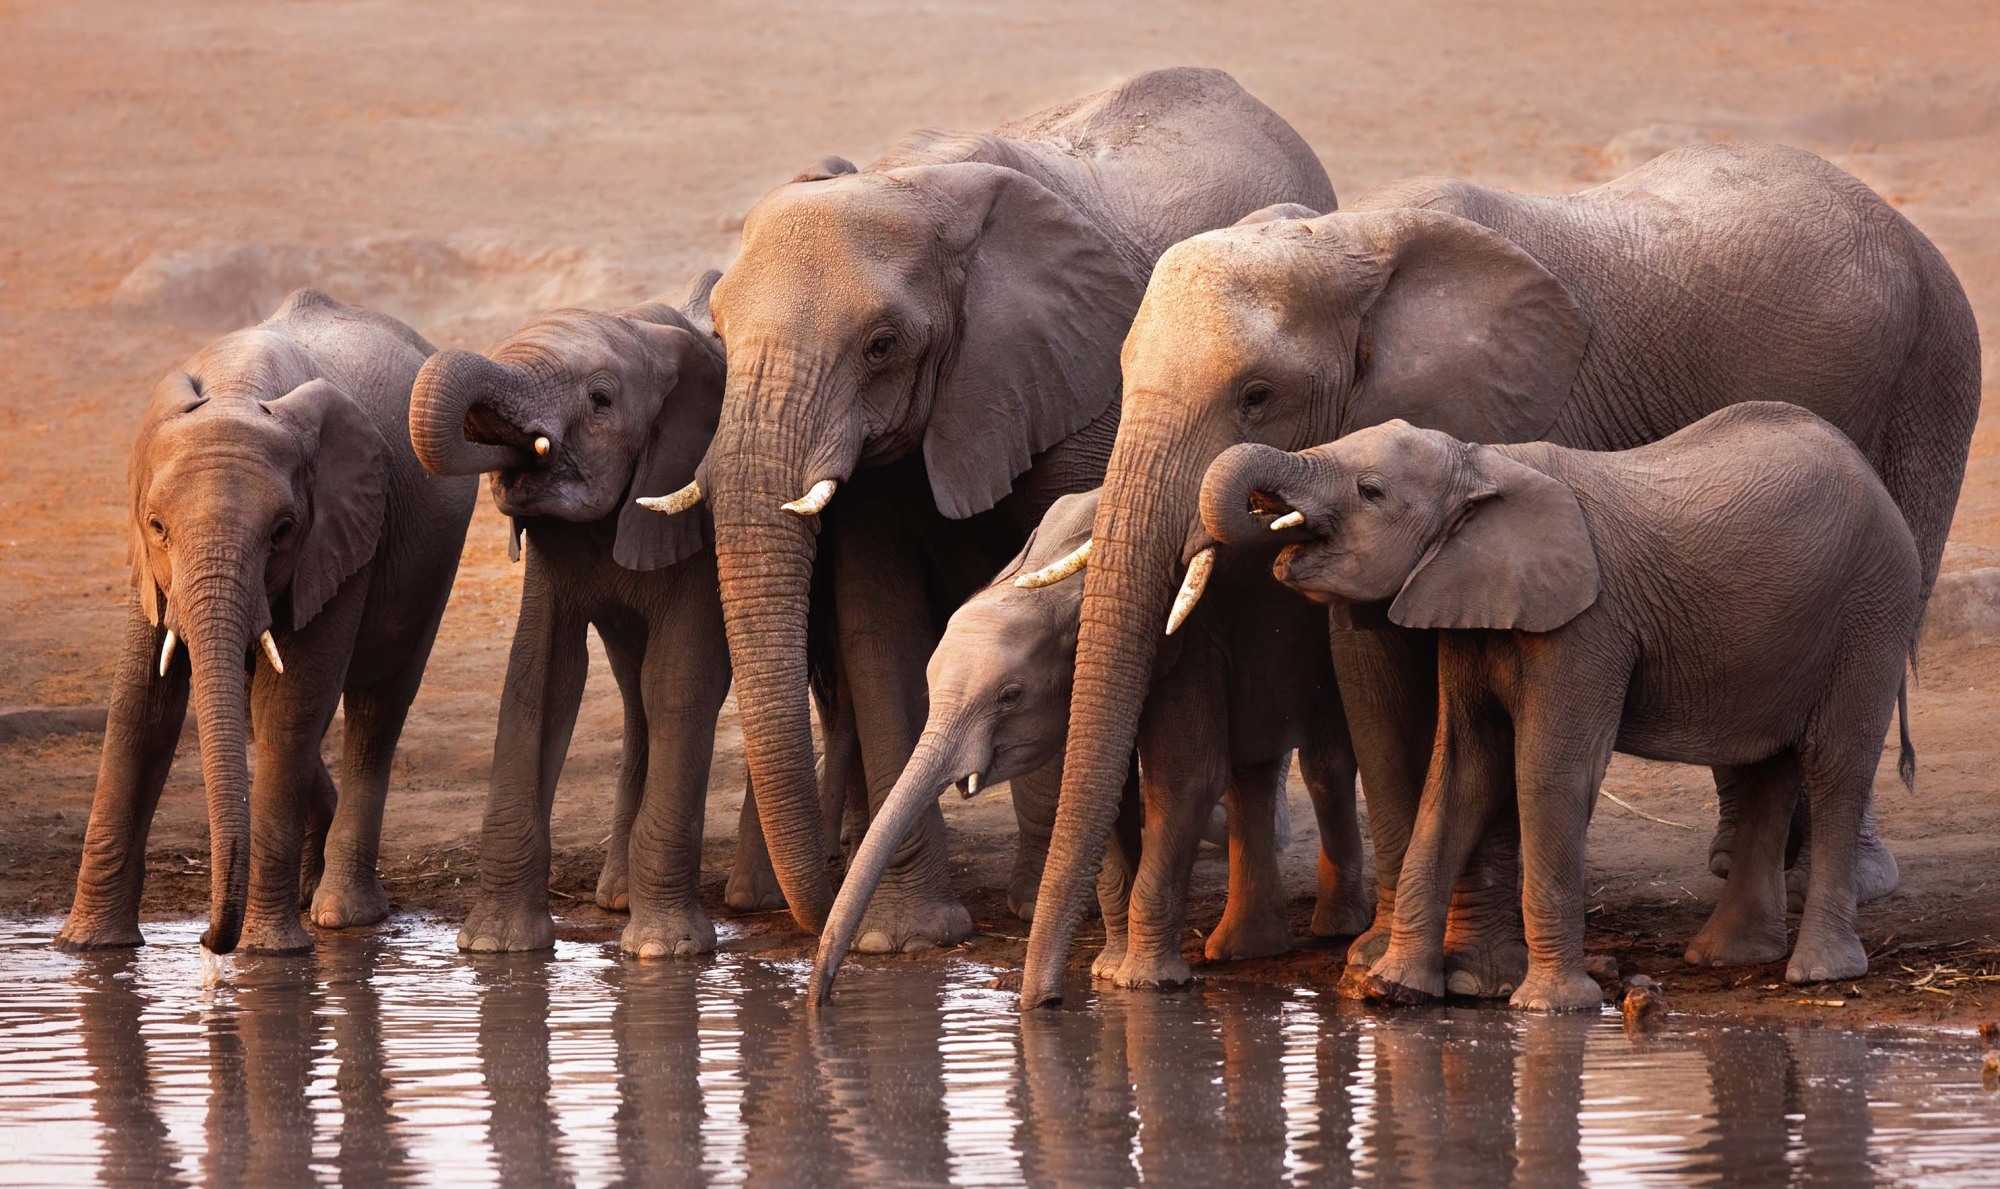 elephants at water's edge